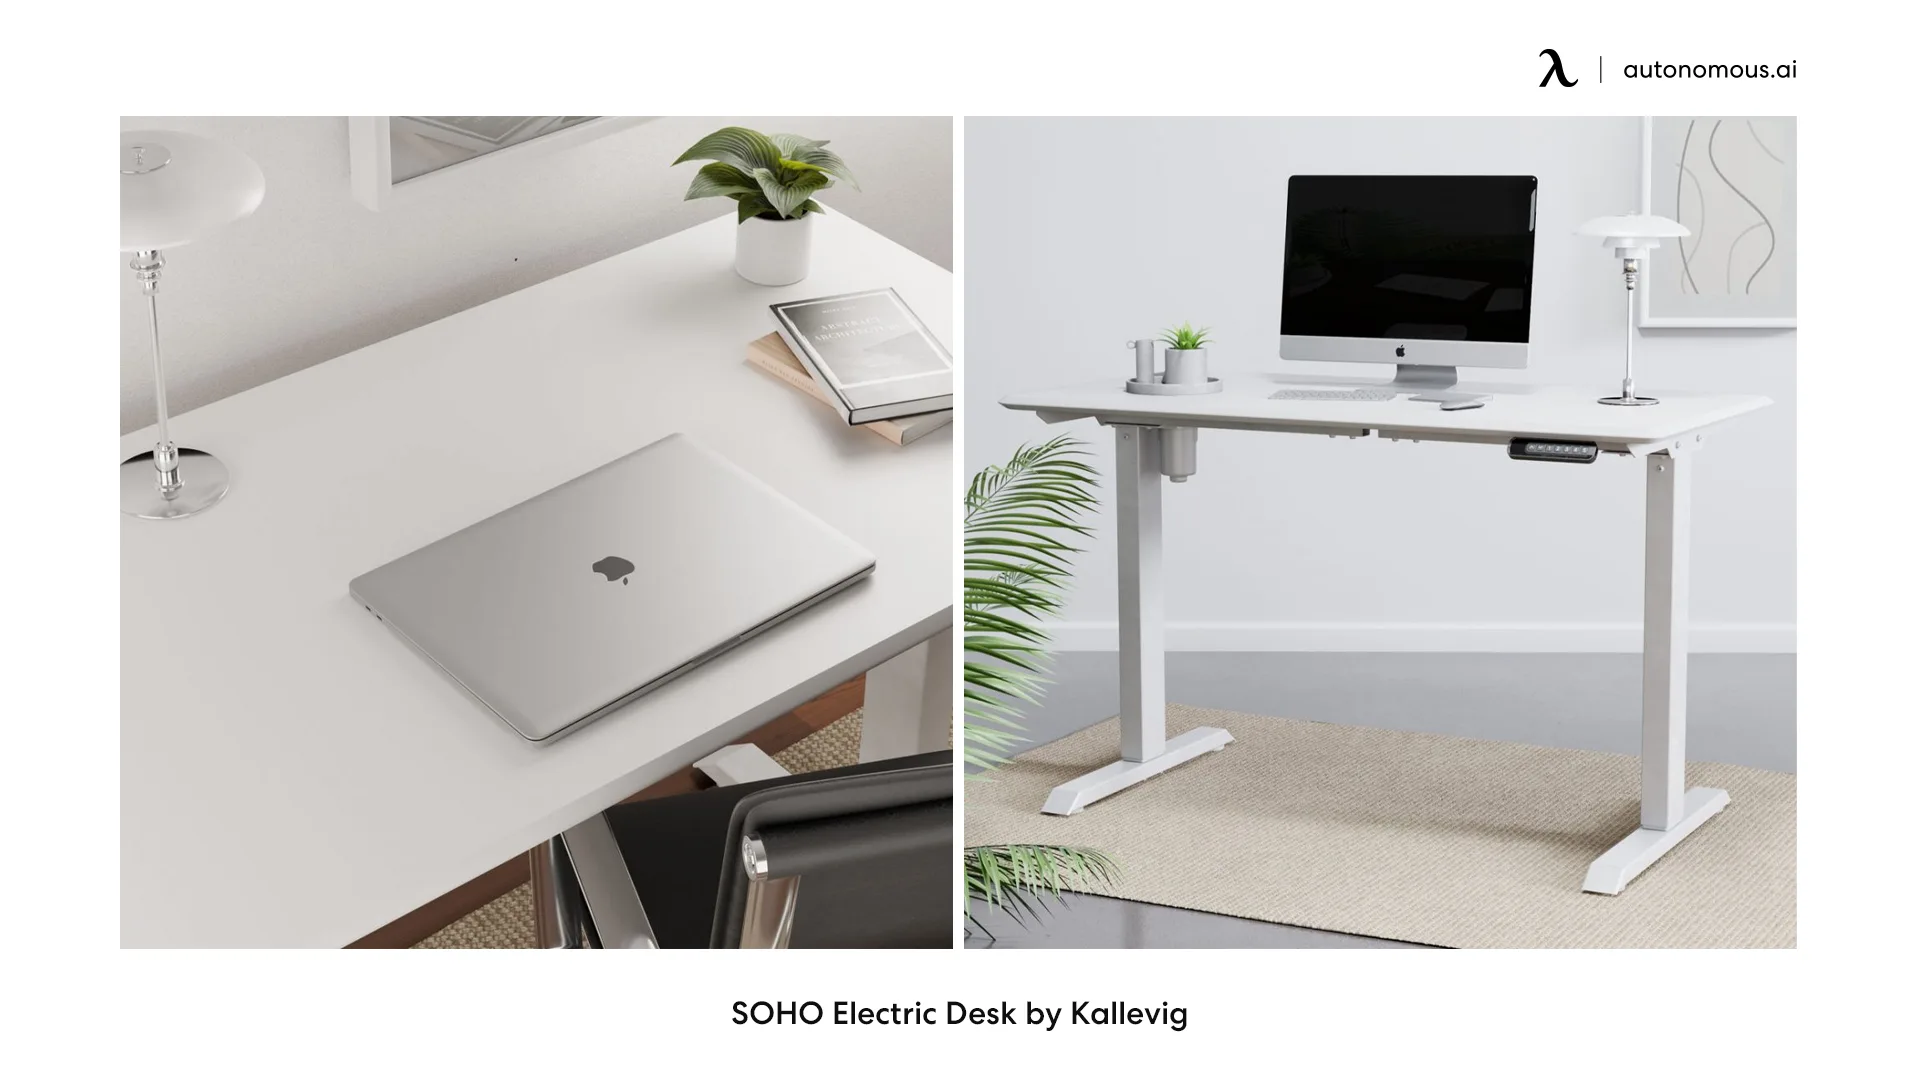 SOHO Electric Desk by Kallevig